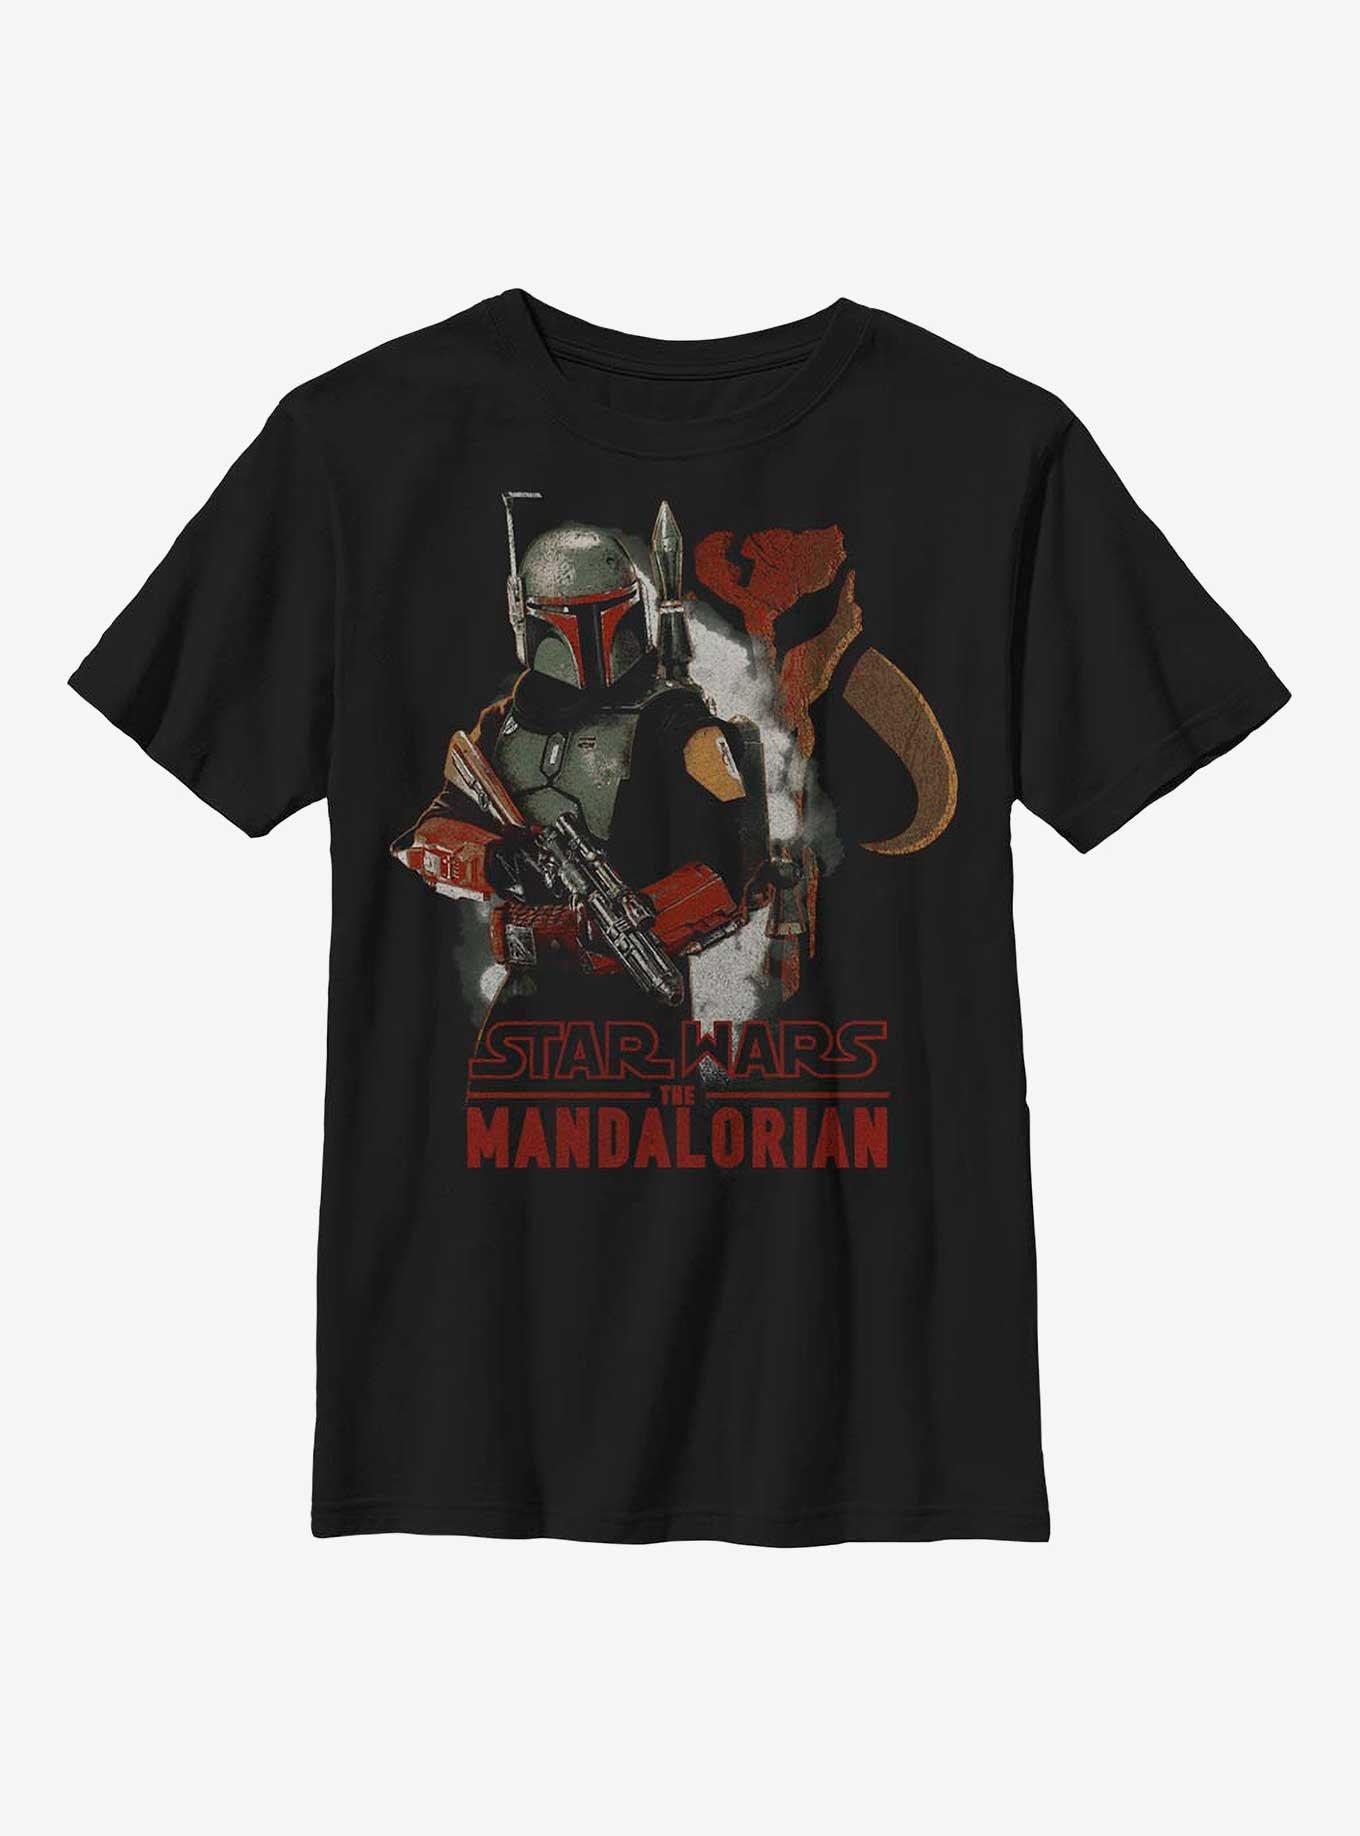 Star Wars The Mandalorian My Father's Armor Boba Fett Youth T-Shirt, BLACK, hi-res